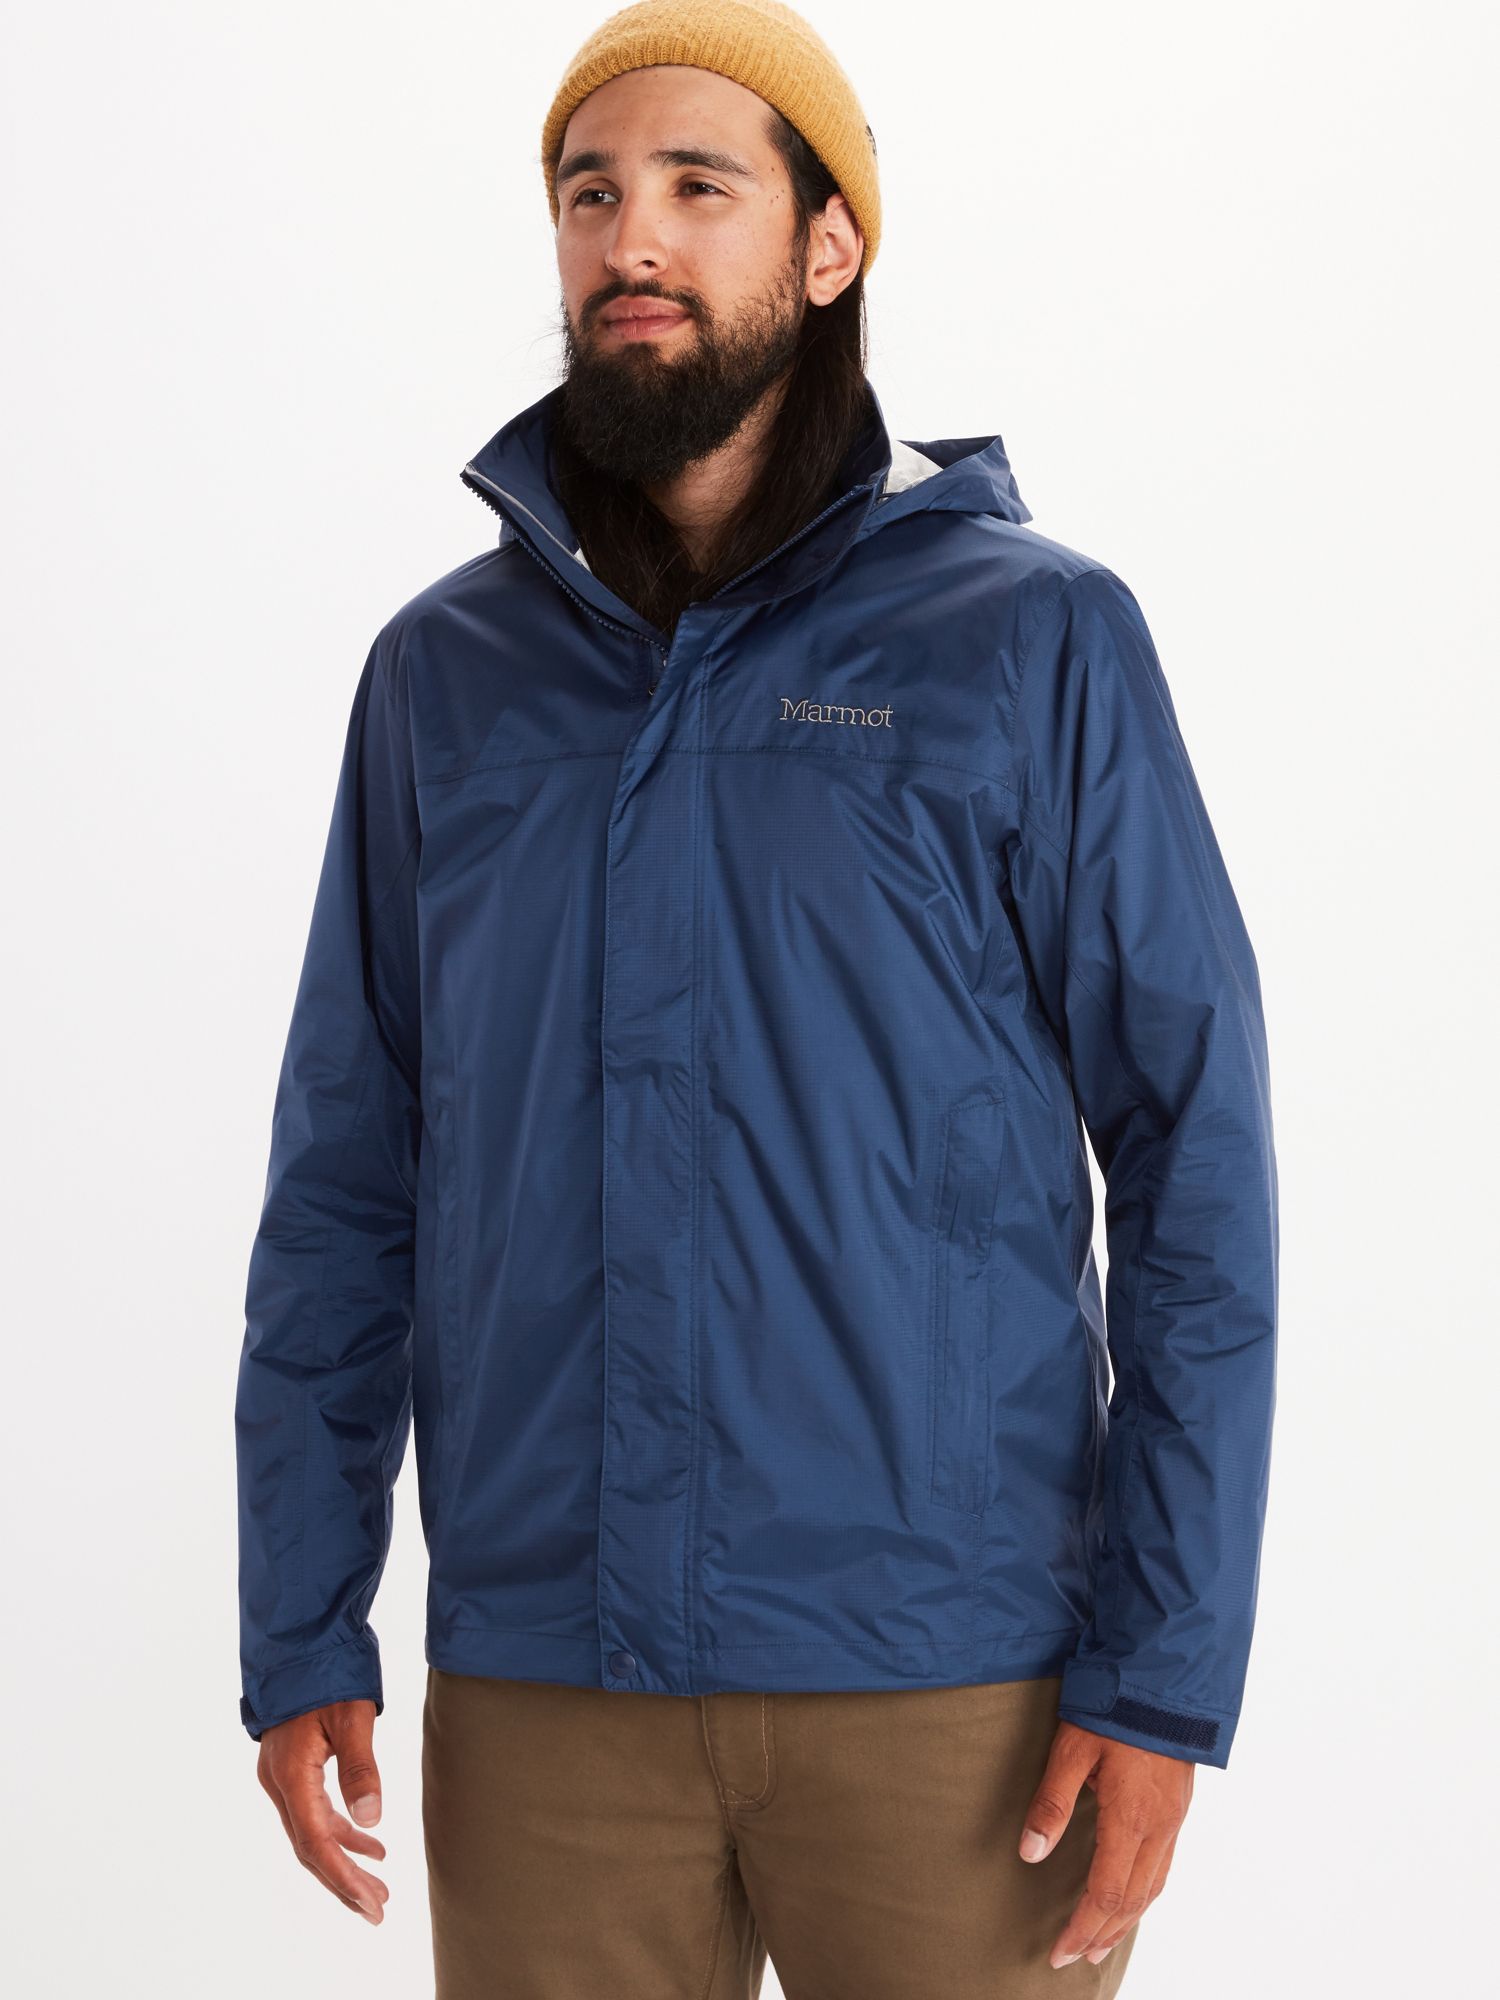 Men's PreCip® Eco Jacket - Big | Marmot